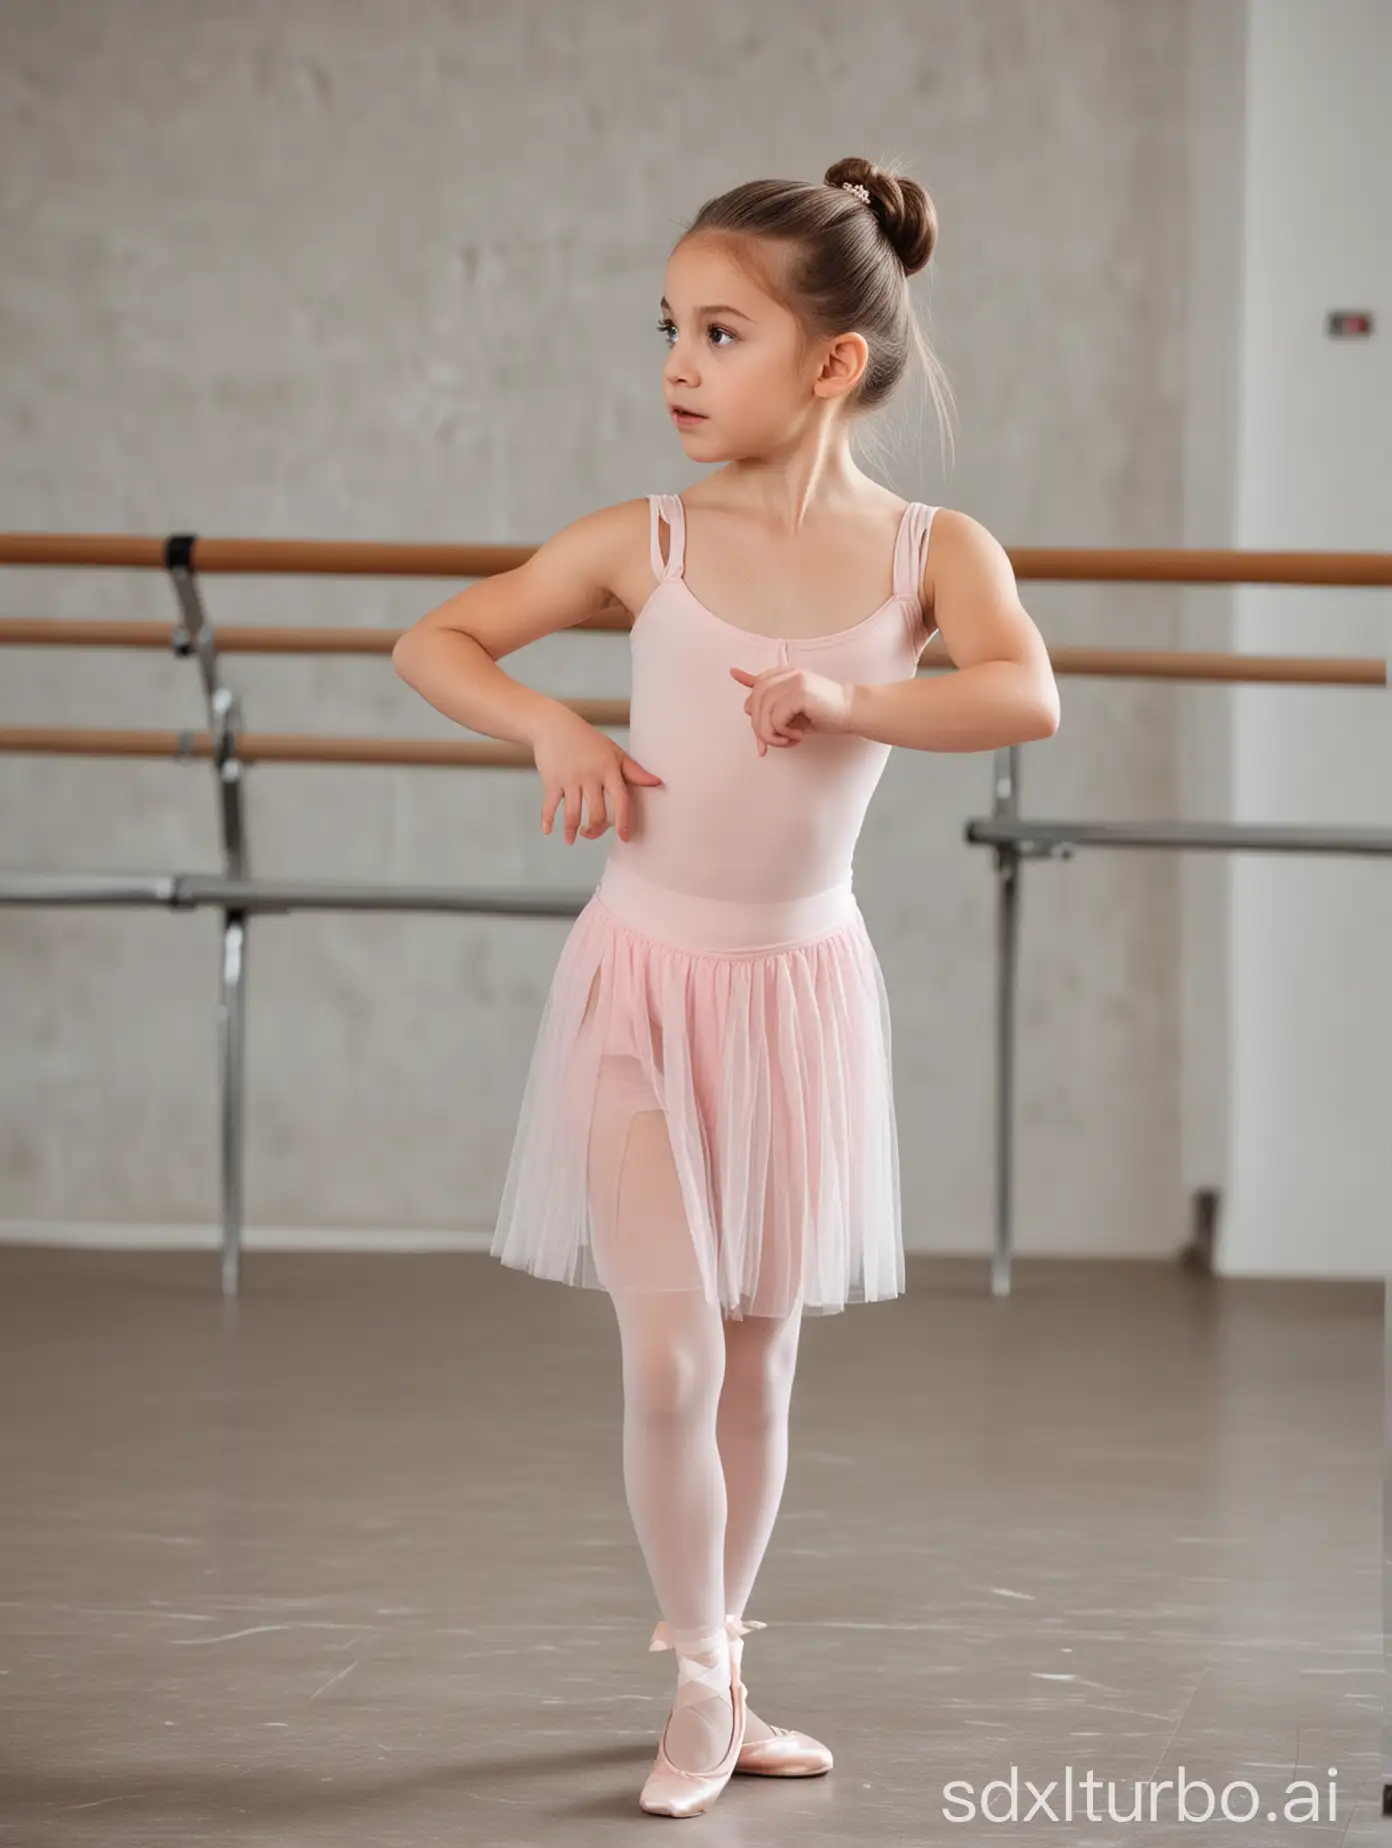 Muscular-7YearOld-Ballerina-at-Ballet-Lesson